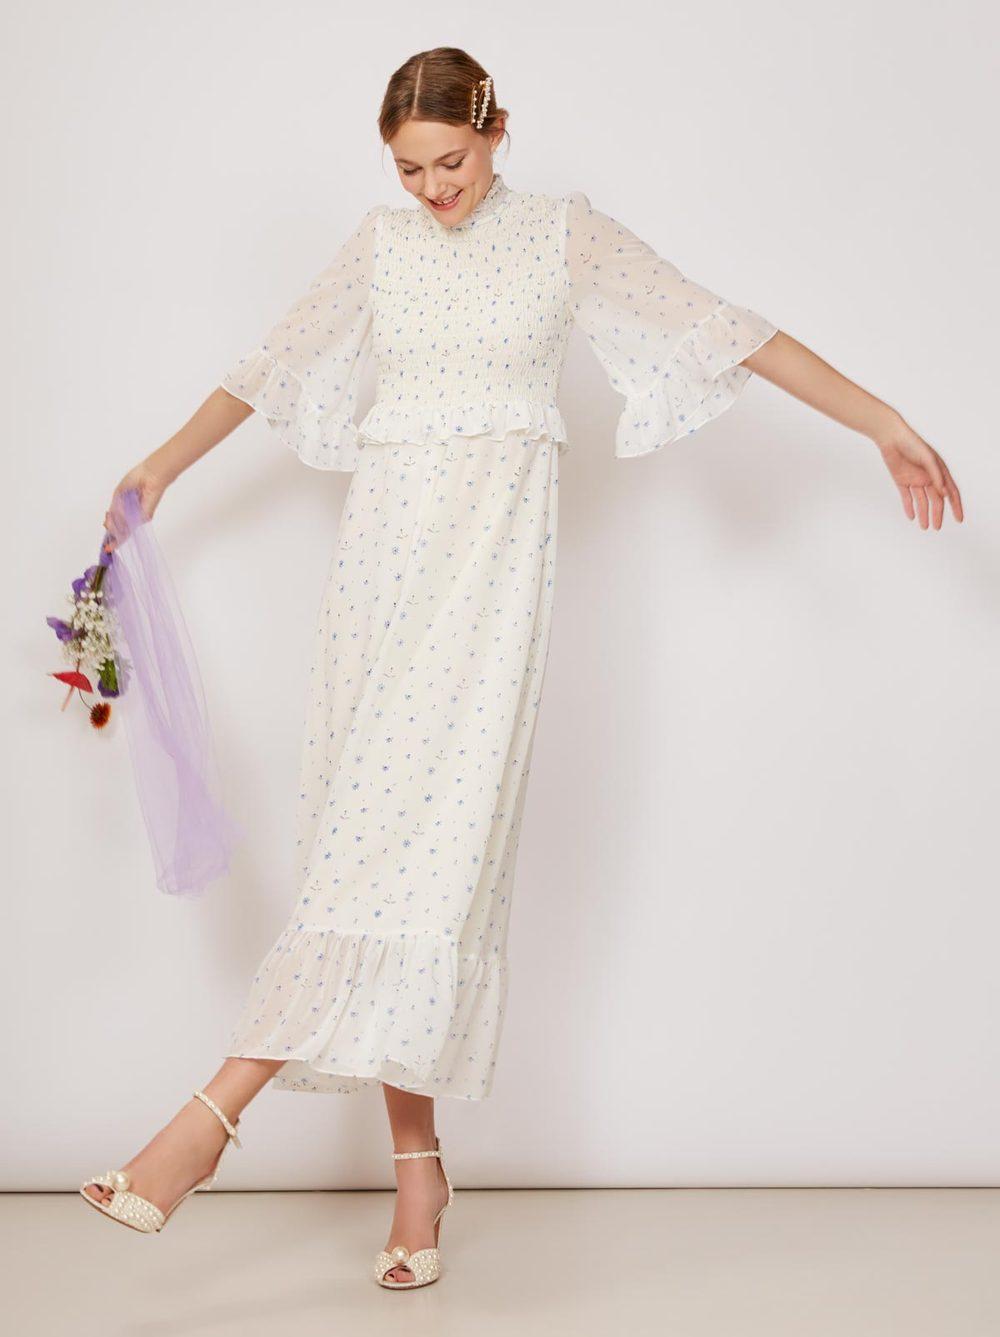 White and blue Kitri Studio wedding dress with three-quarter flutter sleeves